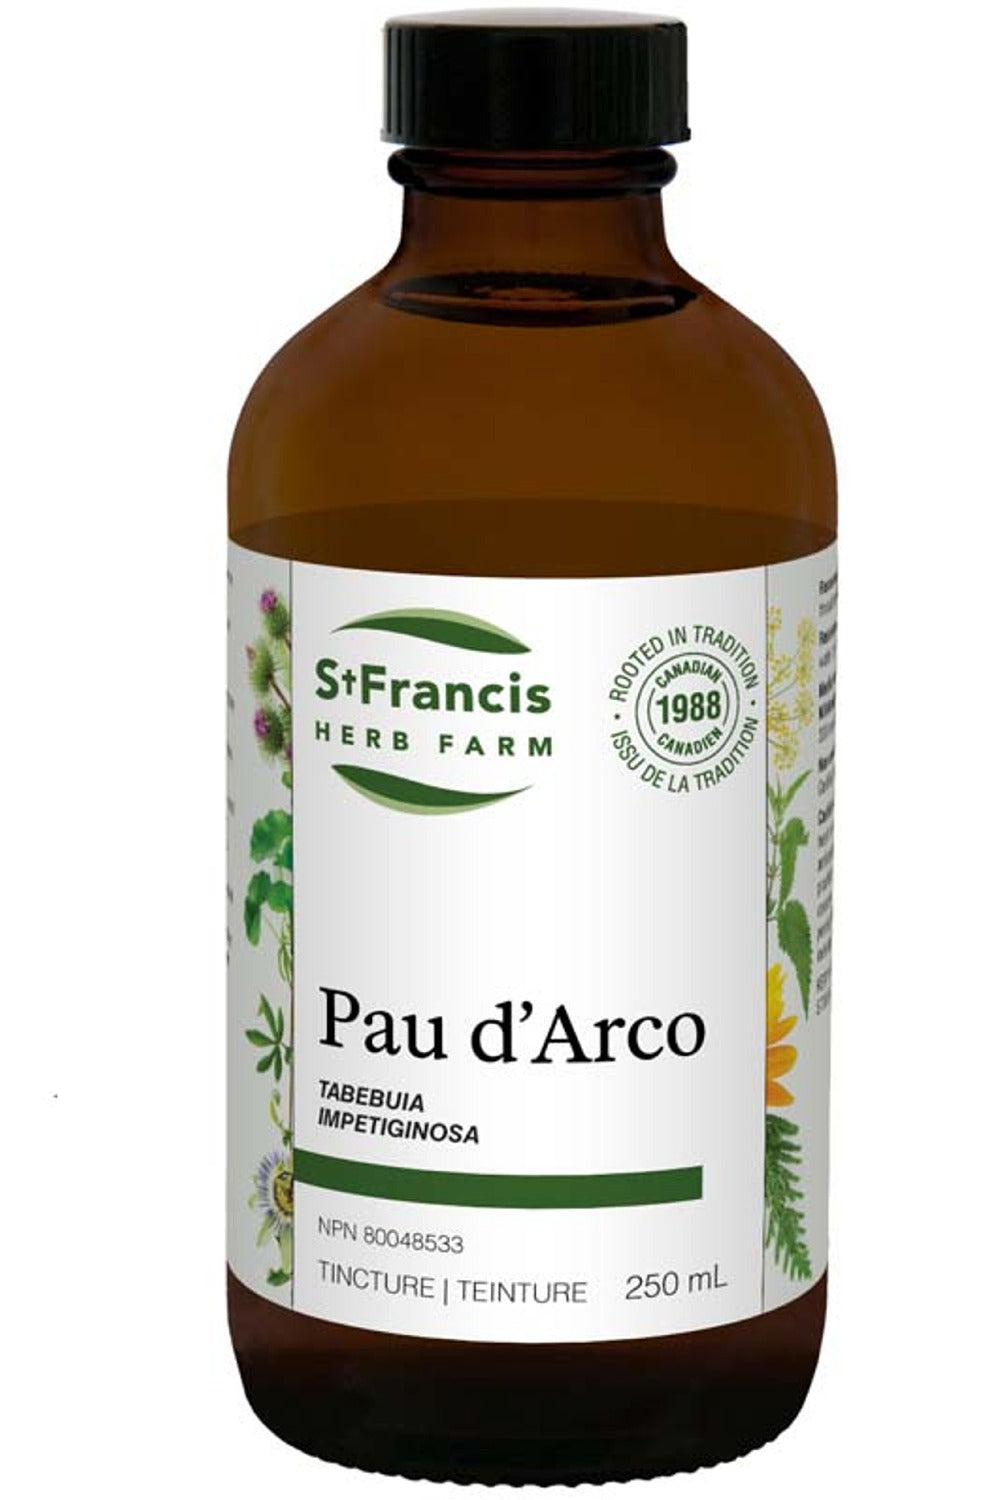 ST FRANCIS HERB FARM Pau D'Arco (250 ml)